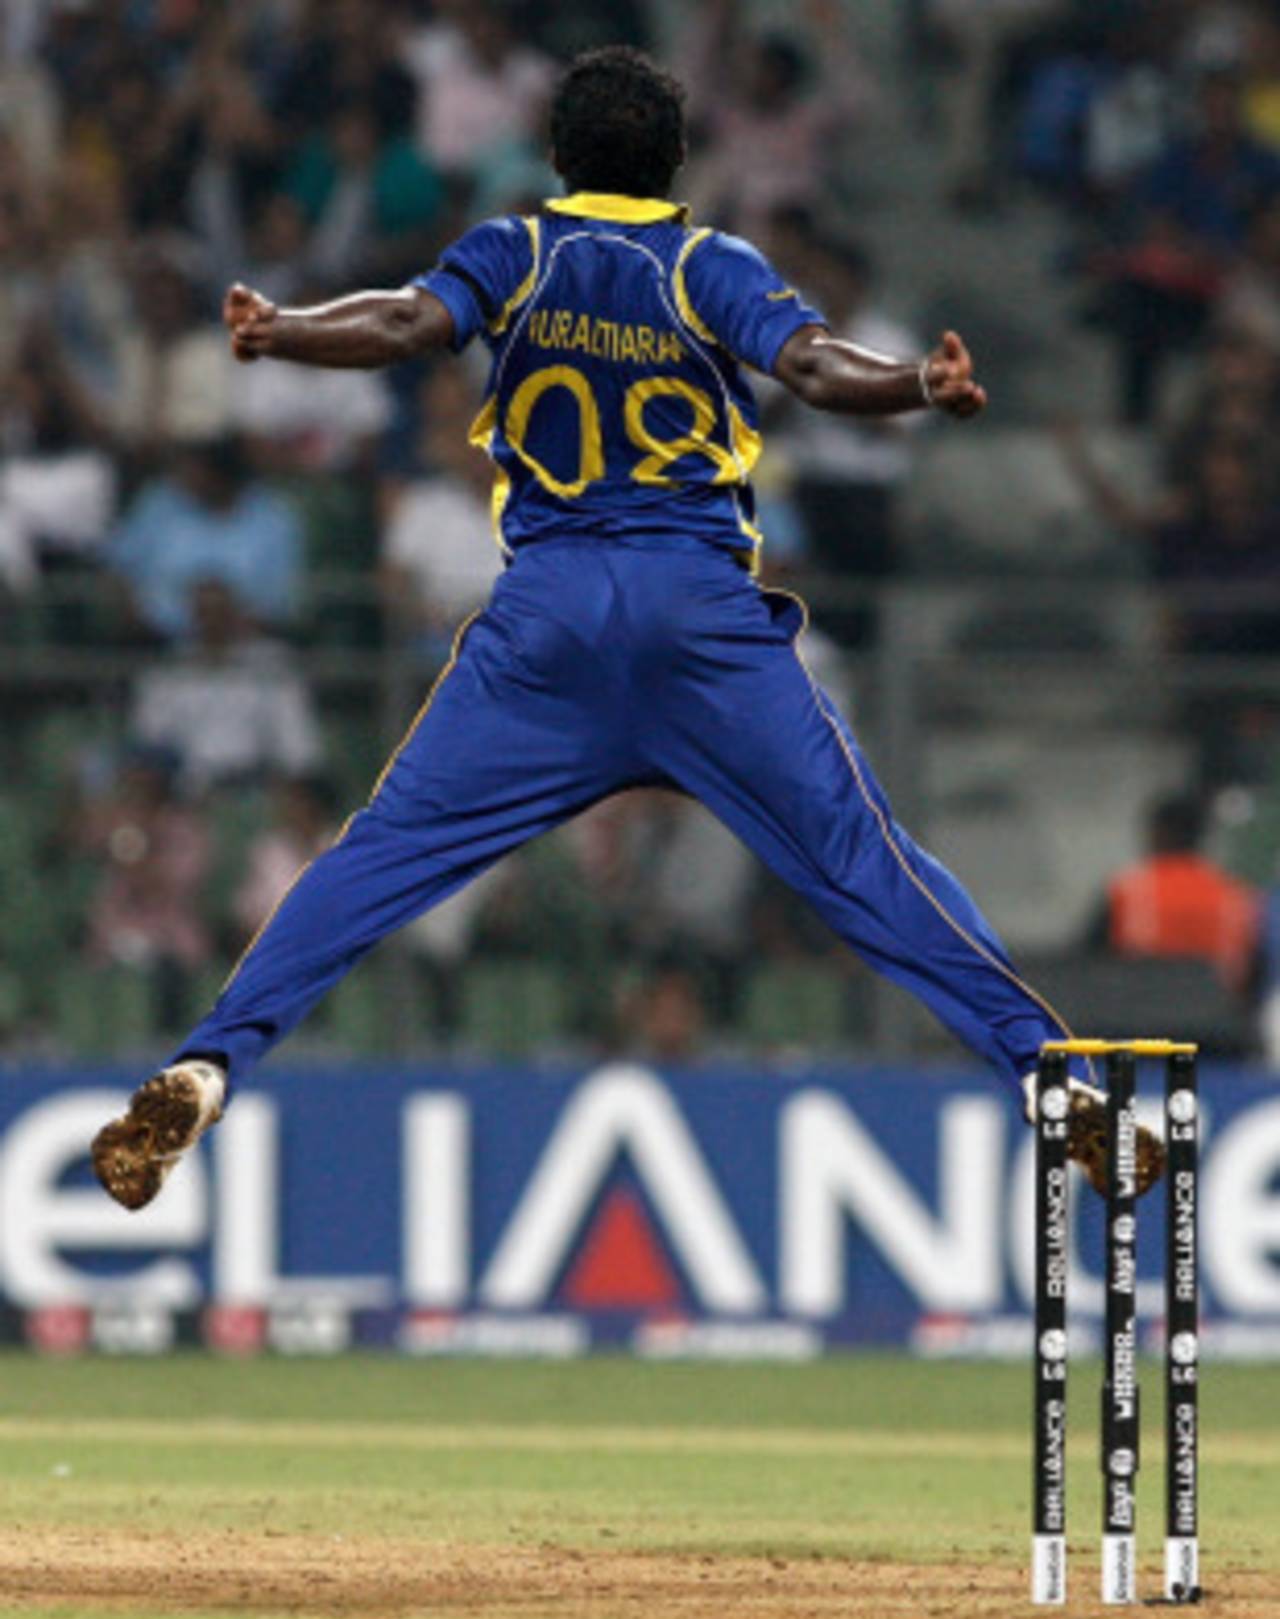 Muttiah Muralitharan takes off after catching Scott Styris, New Zealand v Sri Lanka, Group A, World Cup 2011, Mumbai, March 18, 2011